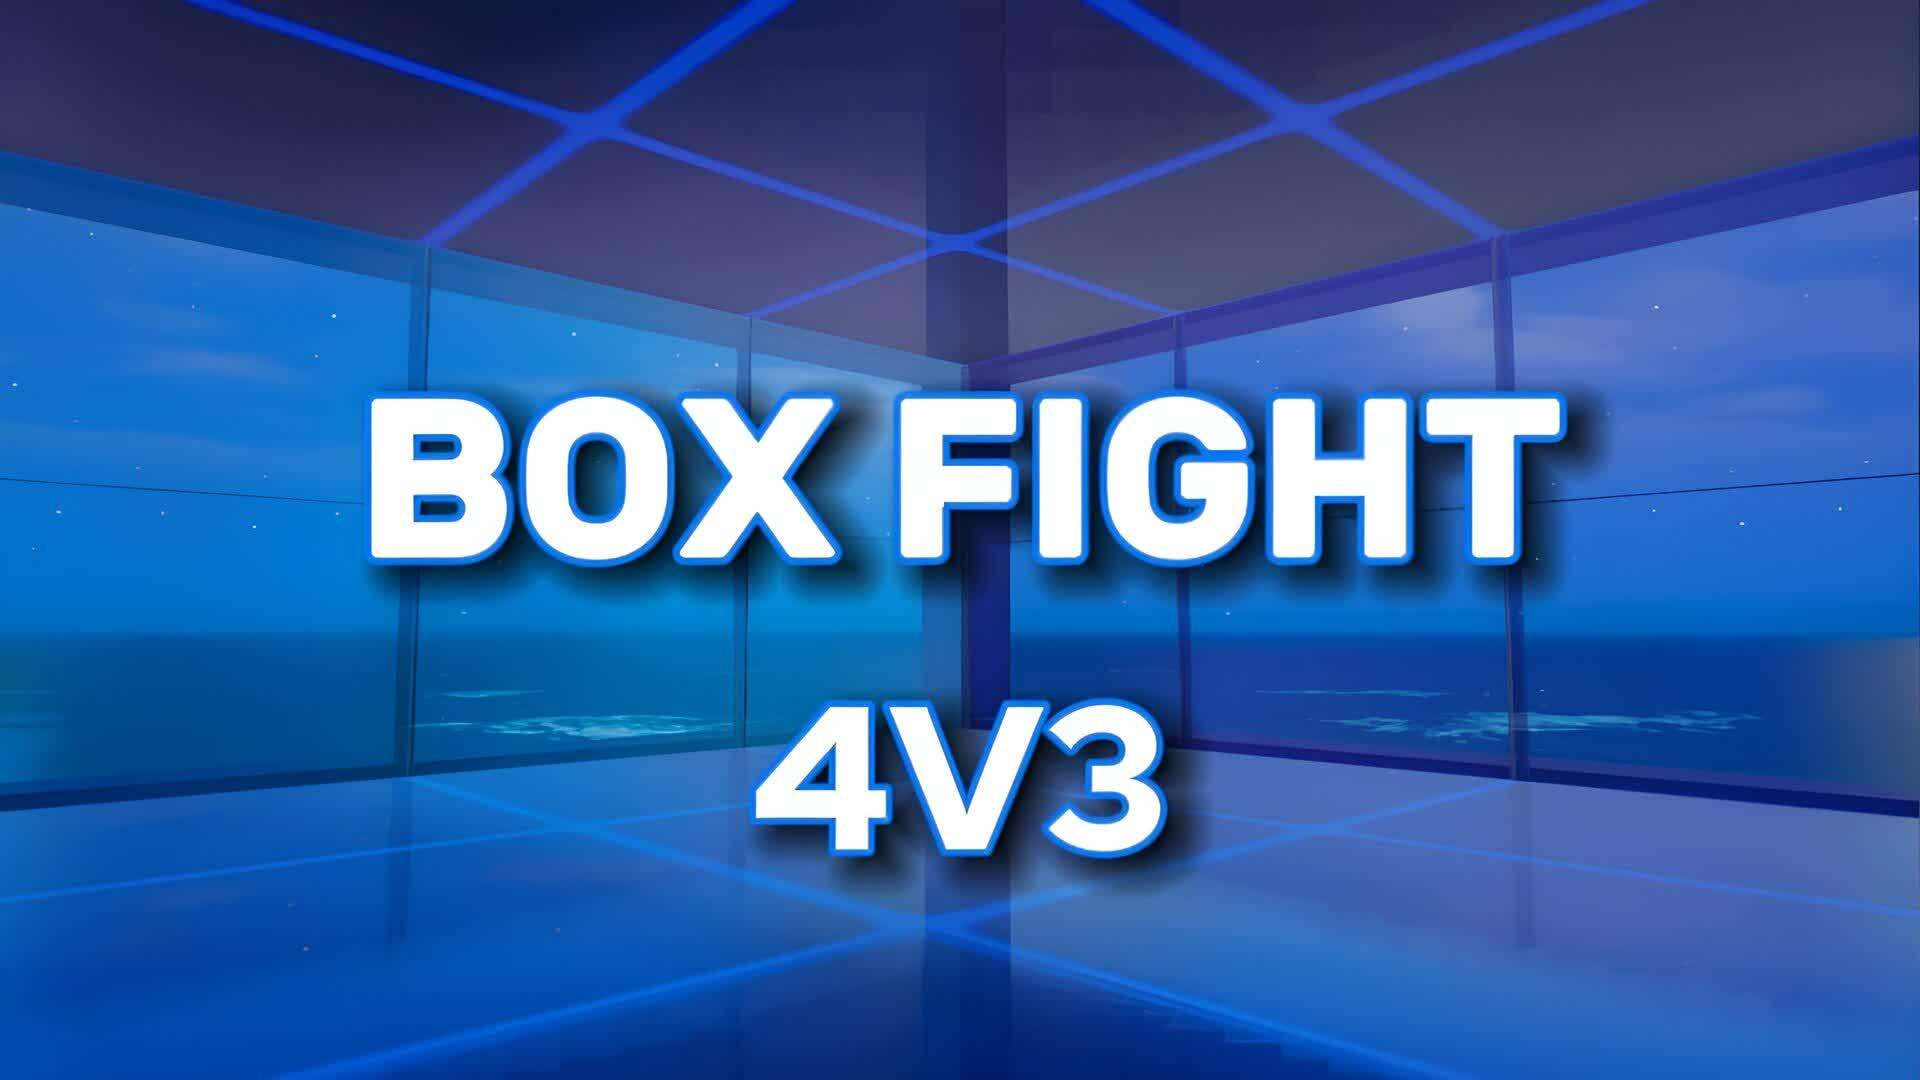 BOX FIGHT 4v3